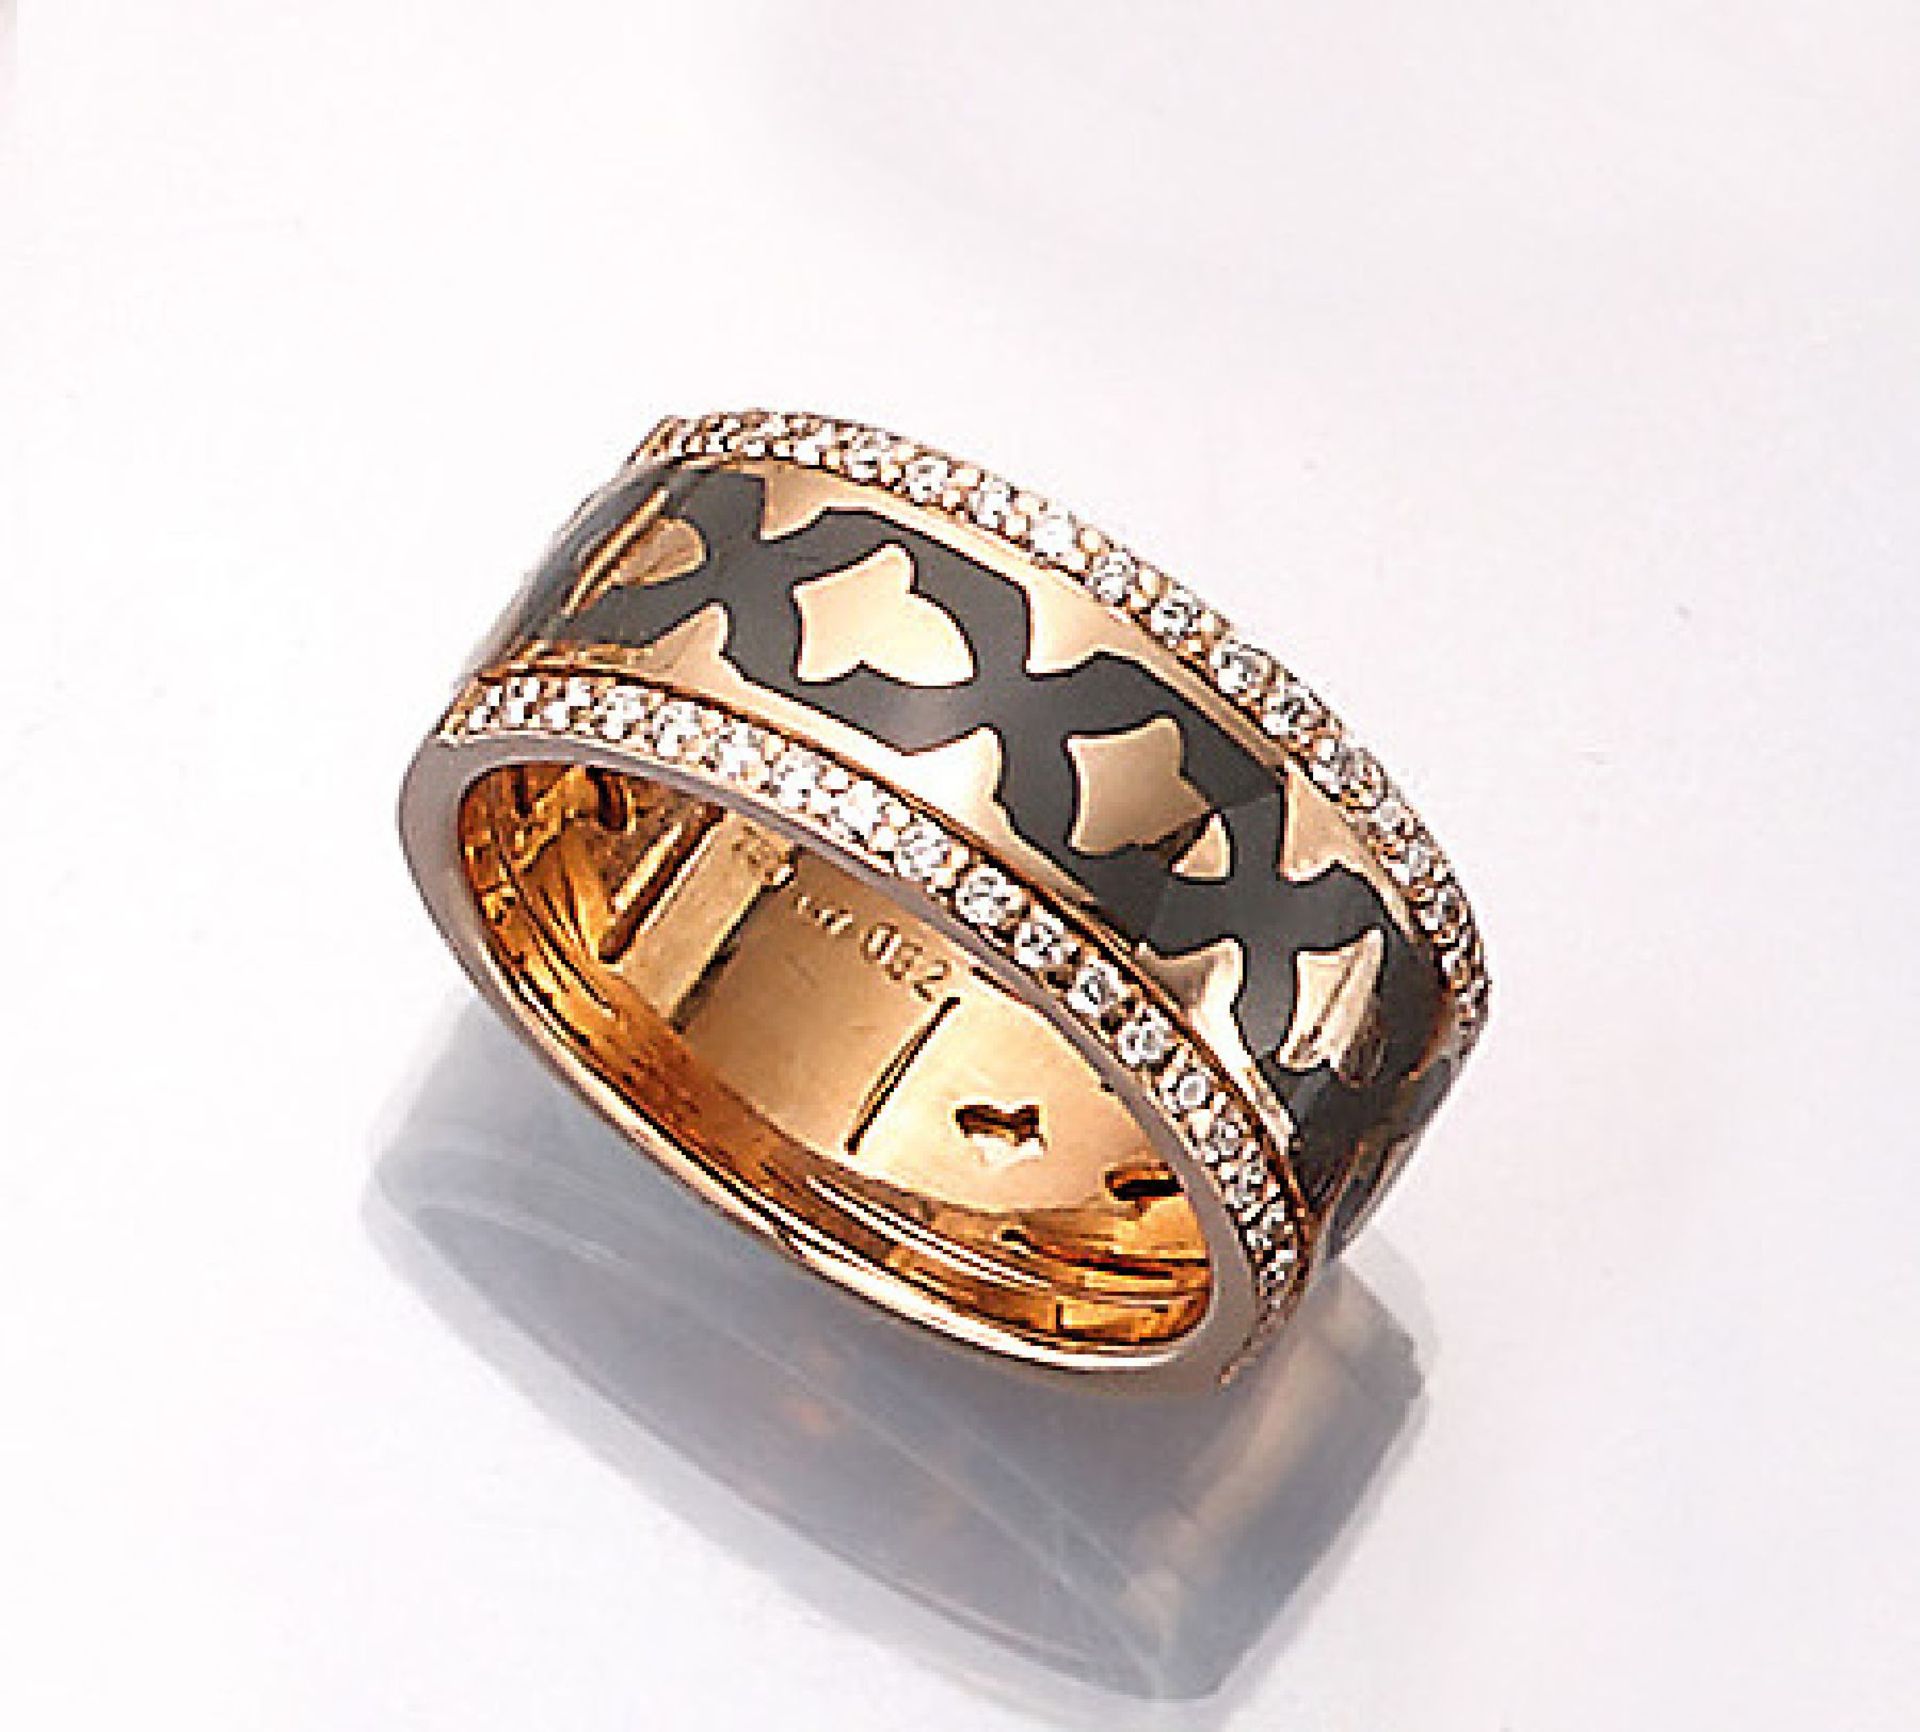 LEO WITTWER 18 kt gold ring with enamel and brilliants , RoseG 750/000, grey enameled, brilliants